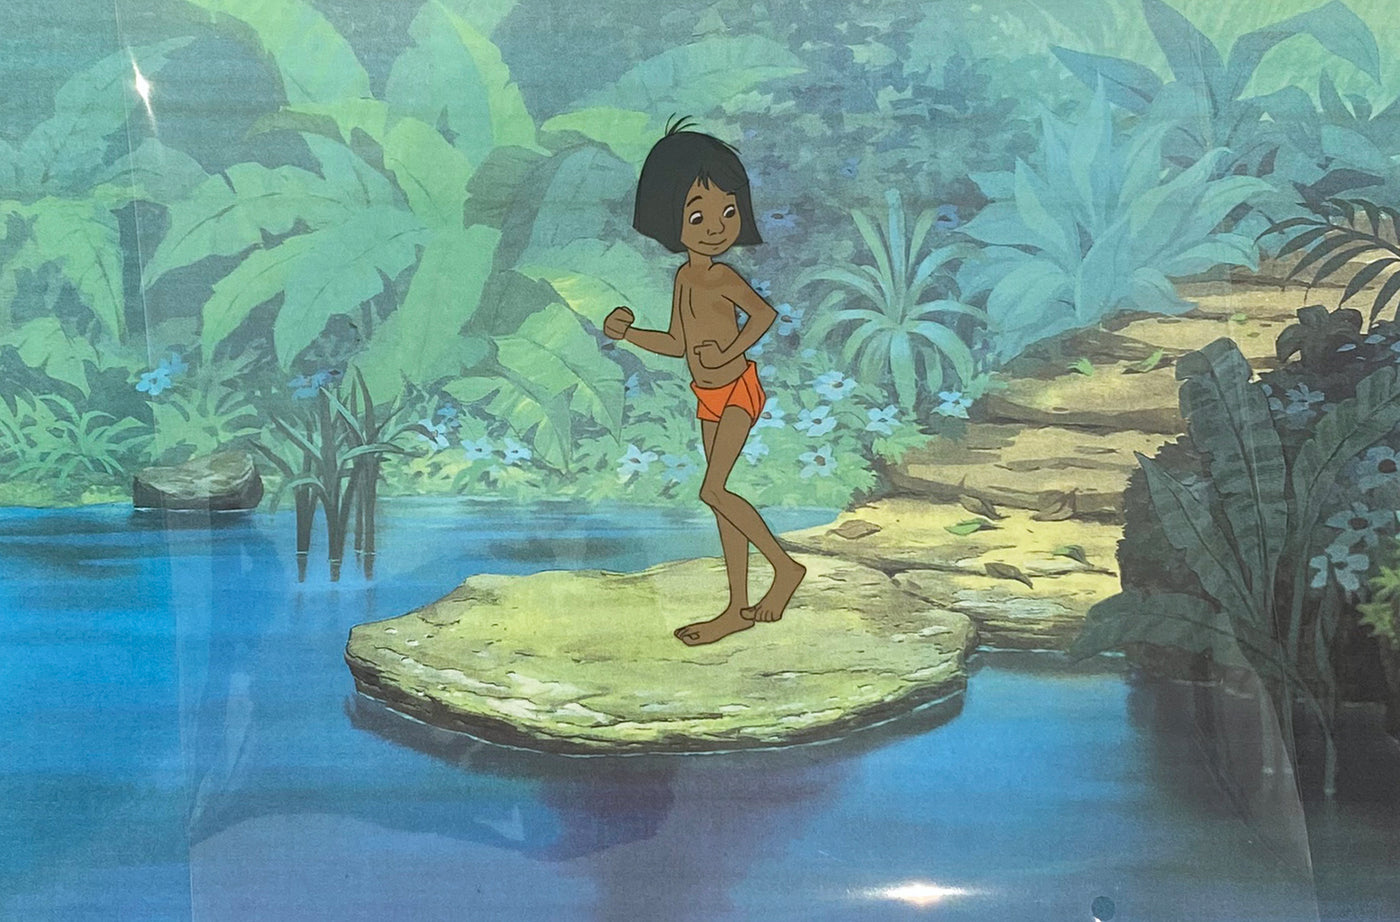 Original Walt Disney Production Cel from The Jungle Book featuring Mowgli